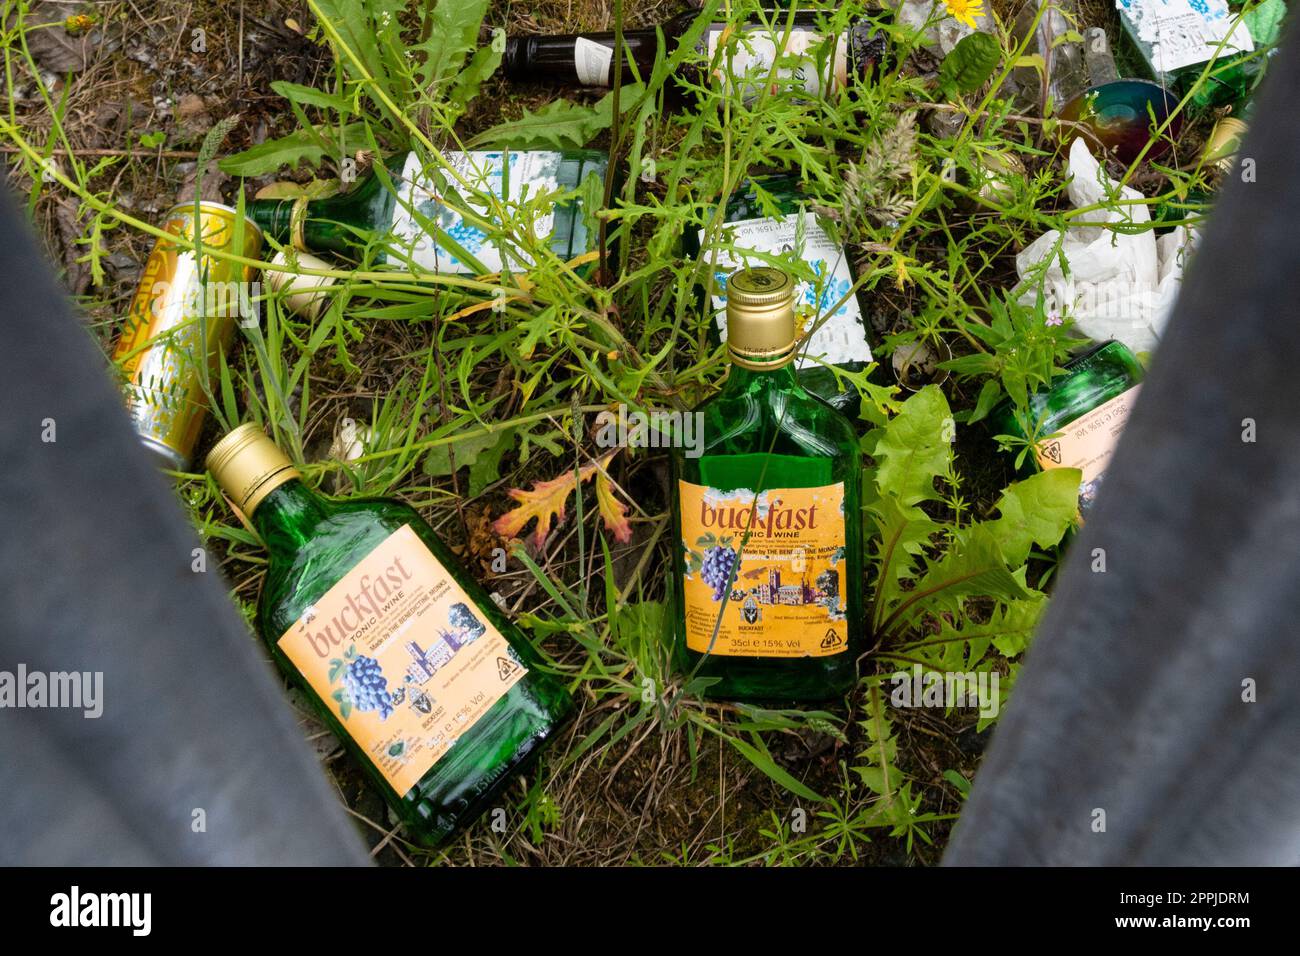 Scotland alcohol problems - empty buckfast bottles thrown onto wasteland through security fencing - Glasgow, Scotland, UK Stock Photo